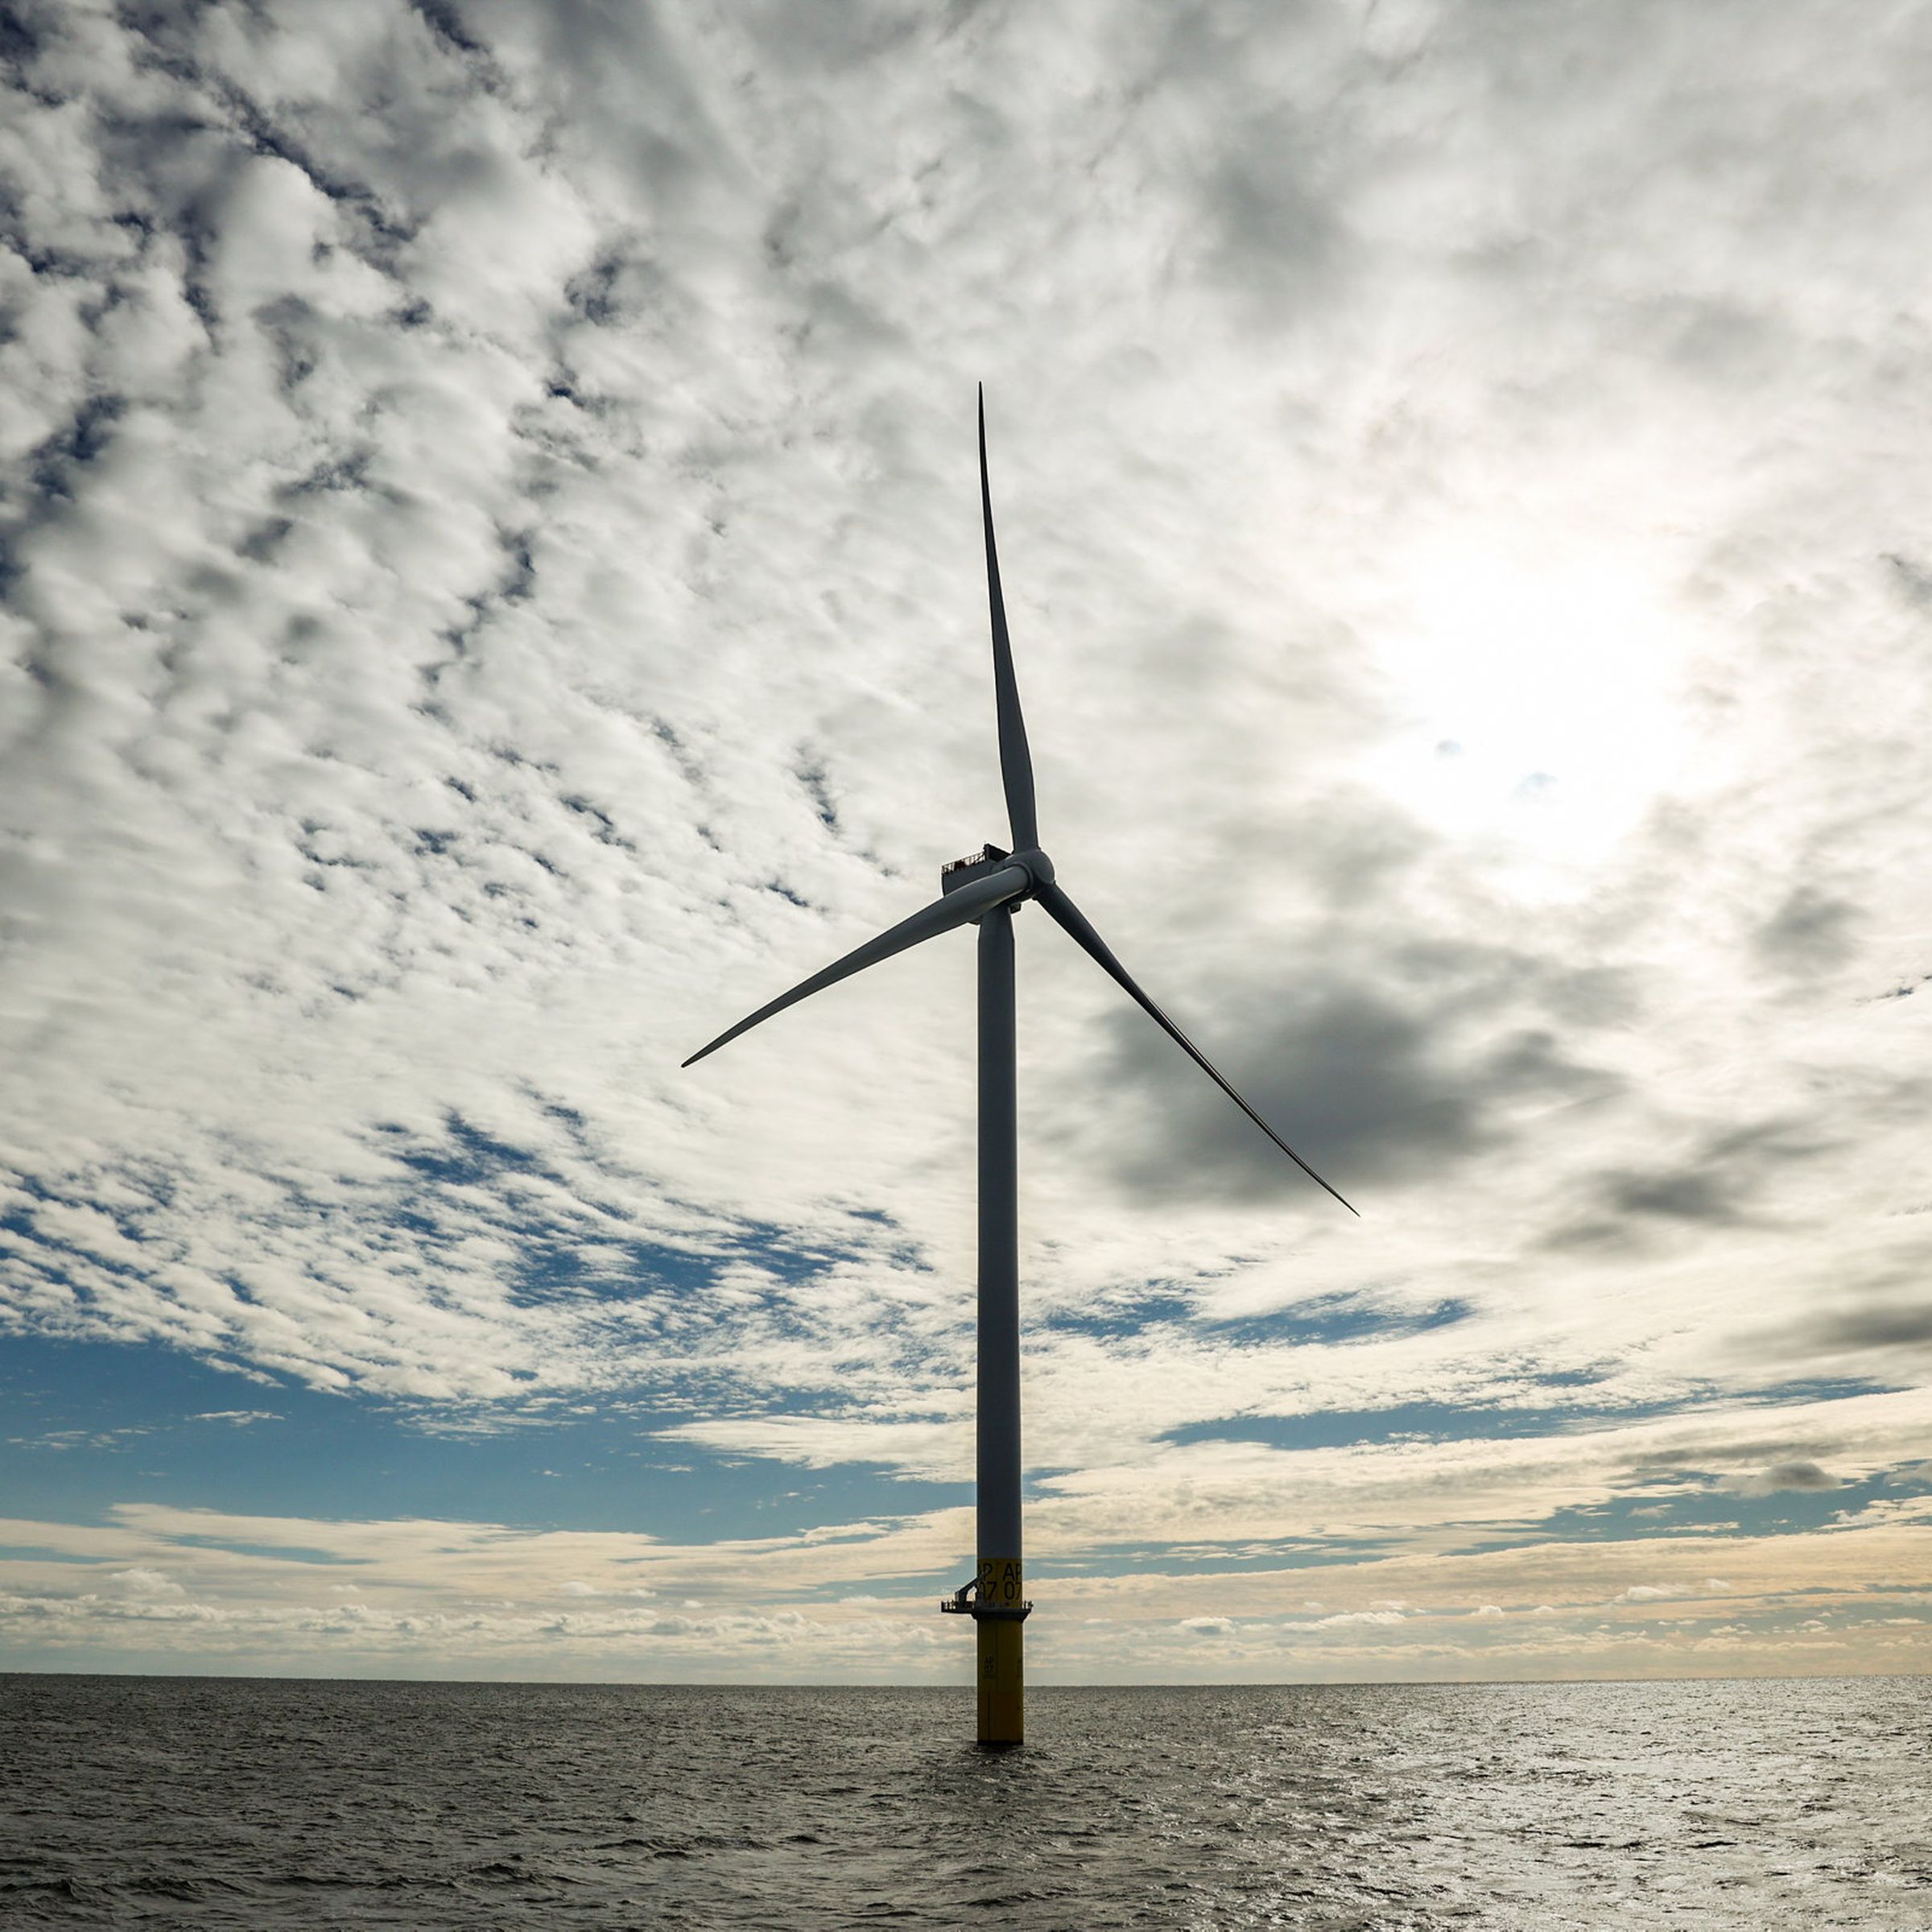 A single wind turbine stands above the sea.